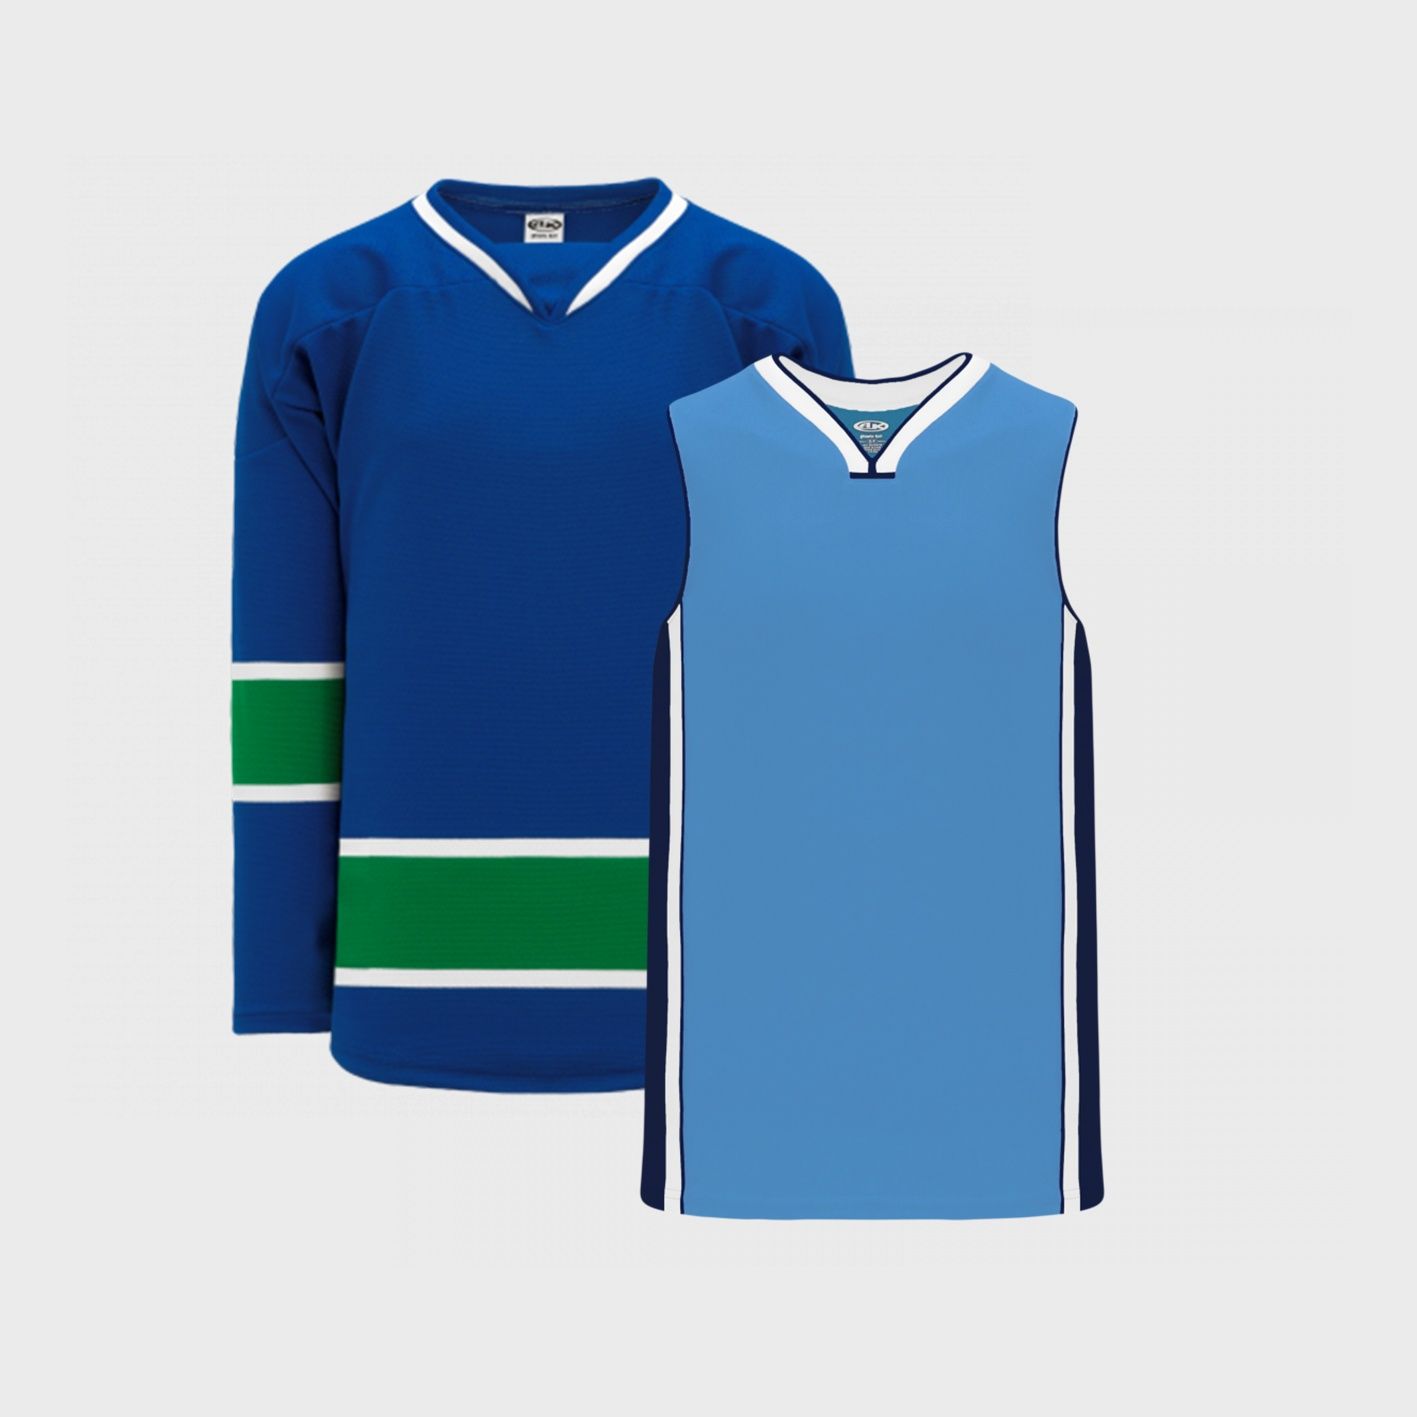 Screen printed hockey jerseys for Vancouver Thunderbirds